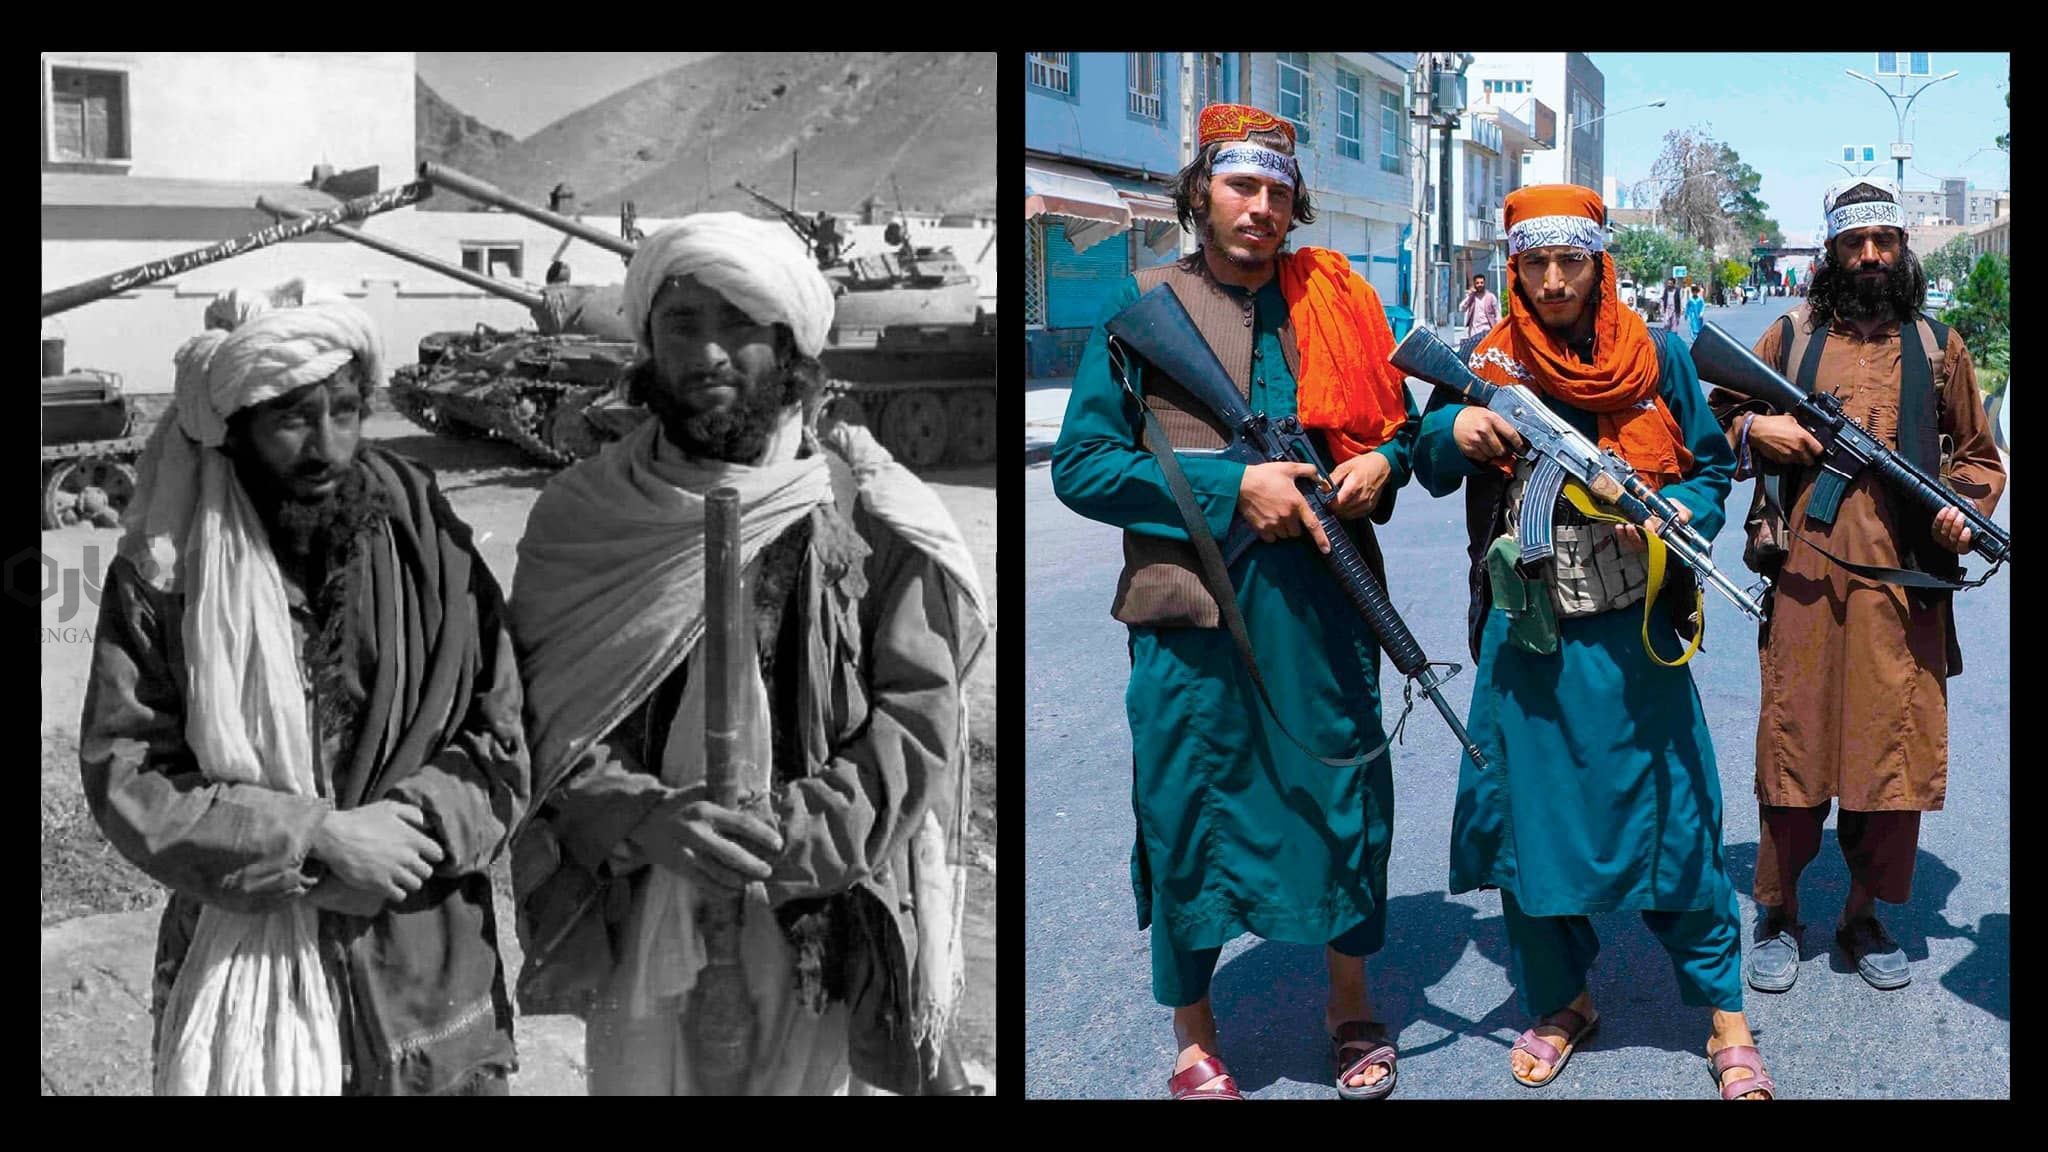 taliban1 - "طالبان بخشی از واقعیت افغانستان" (؟) - هزاره, طالبان کیست, طالبان در افغانستان, طالبان چه میخواهند, طالبان, دموکراسی, پشتون, بلوچ, ایدئولوژی مذهبی, ایدئولوژی, افغانستان کابل, افغانستان طالبان, افغانستان امروز, افغانستان